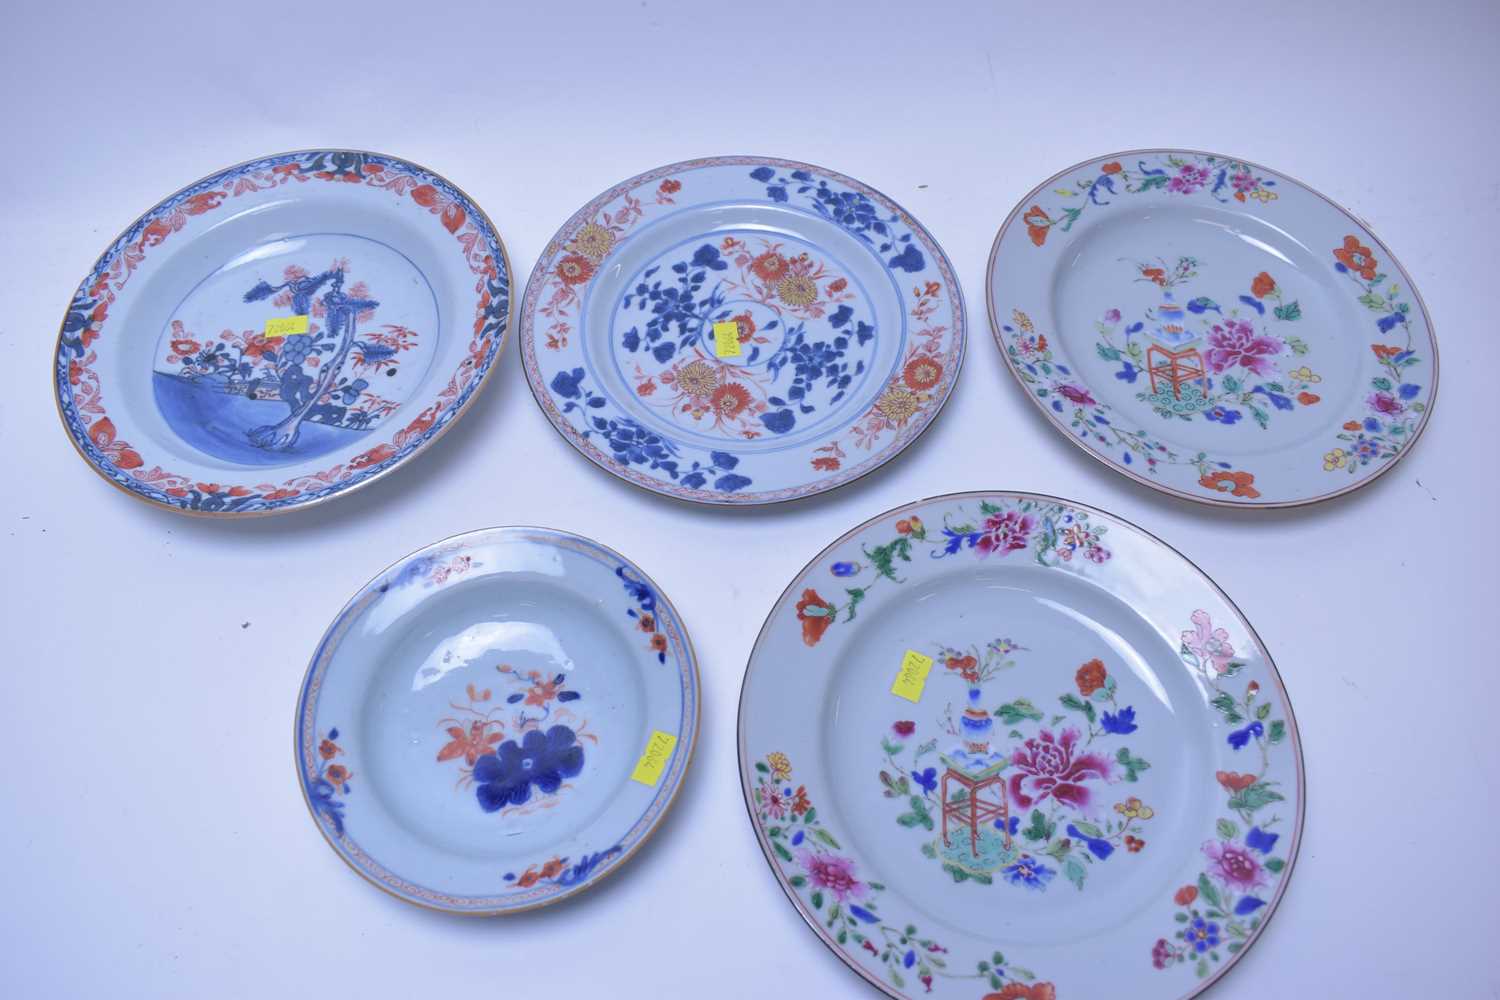 Lot 186 - Chinese and Imari plates and bowls.